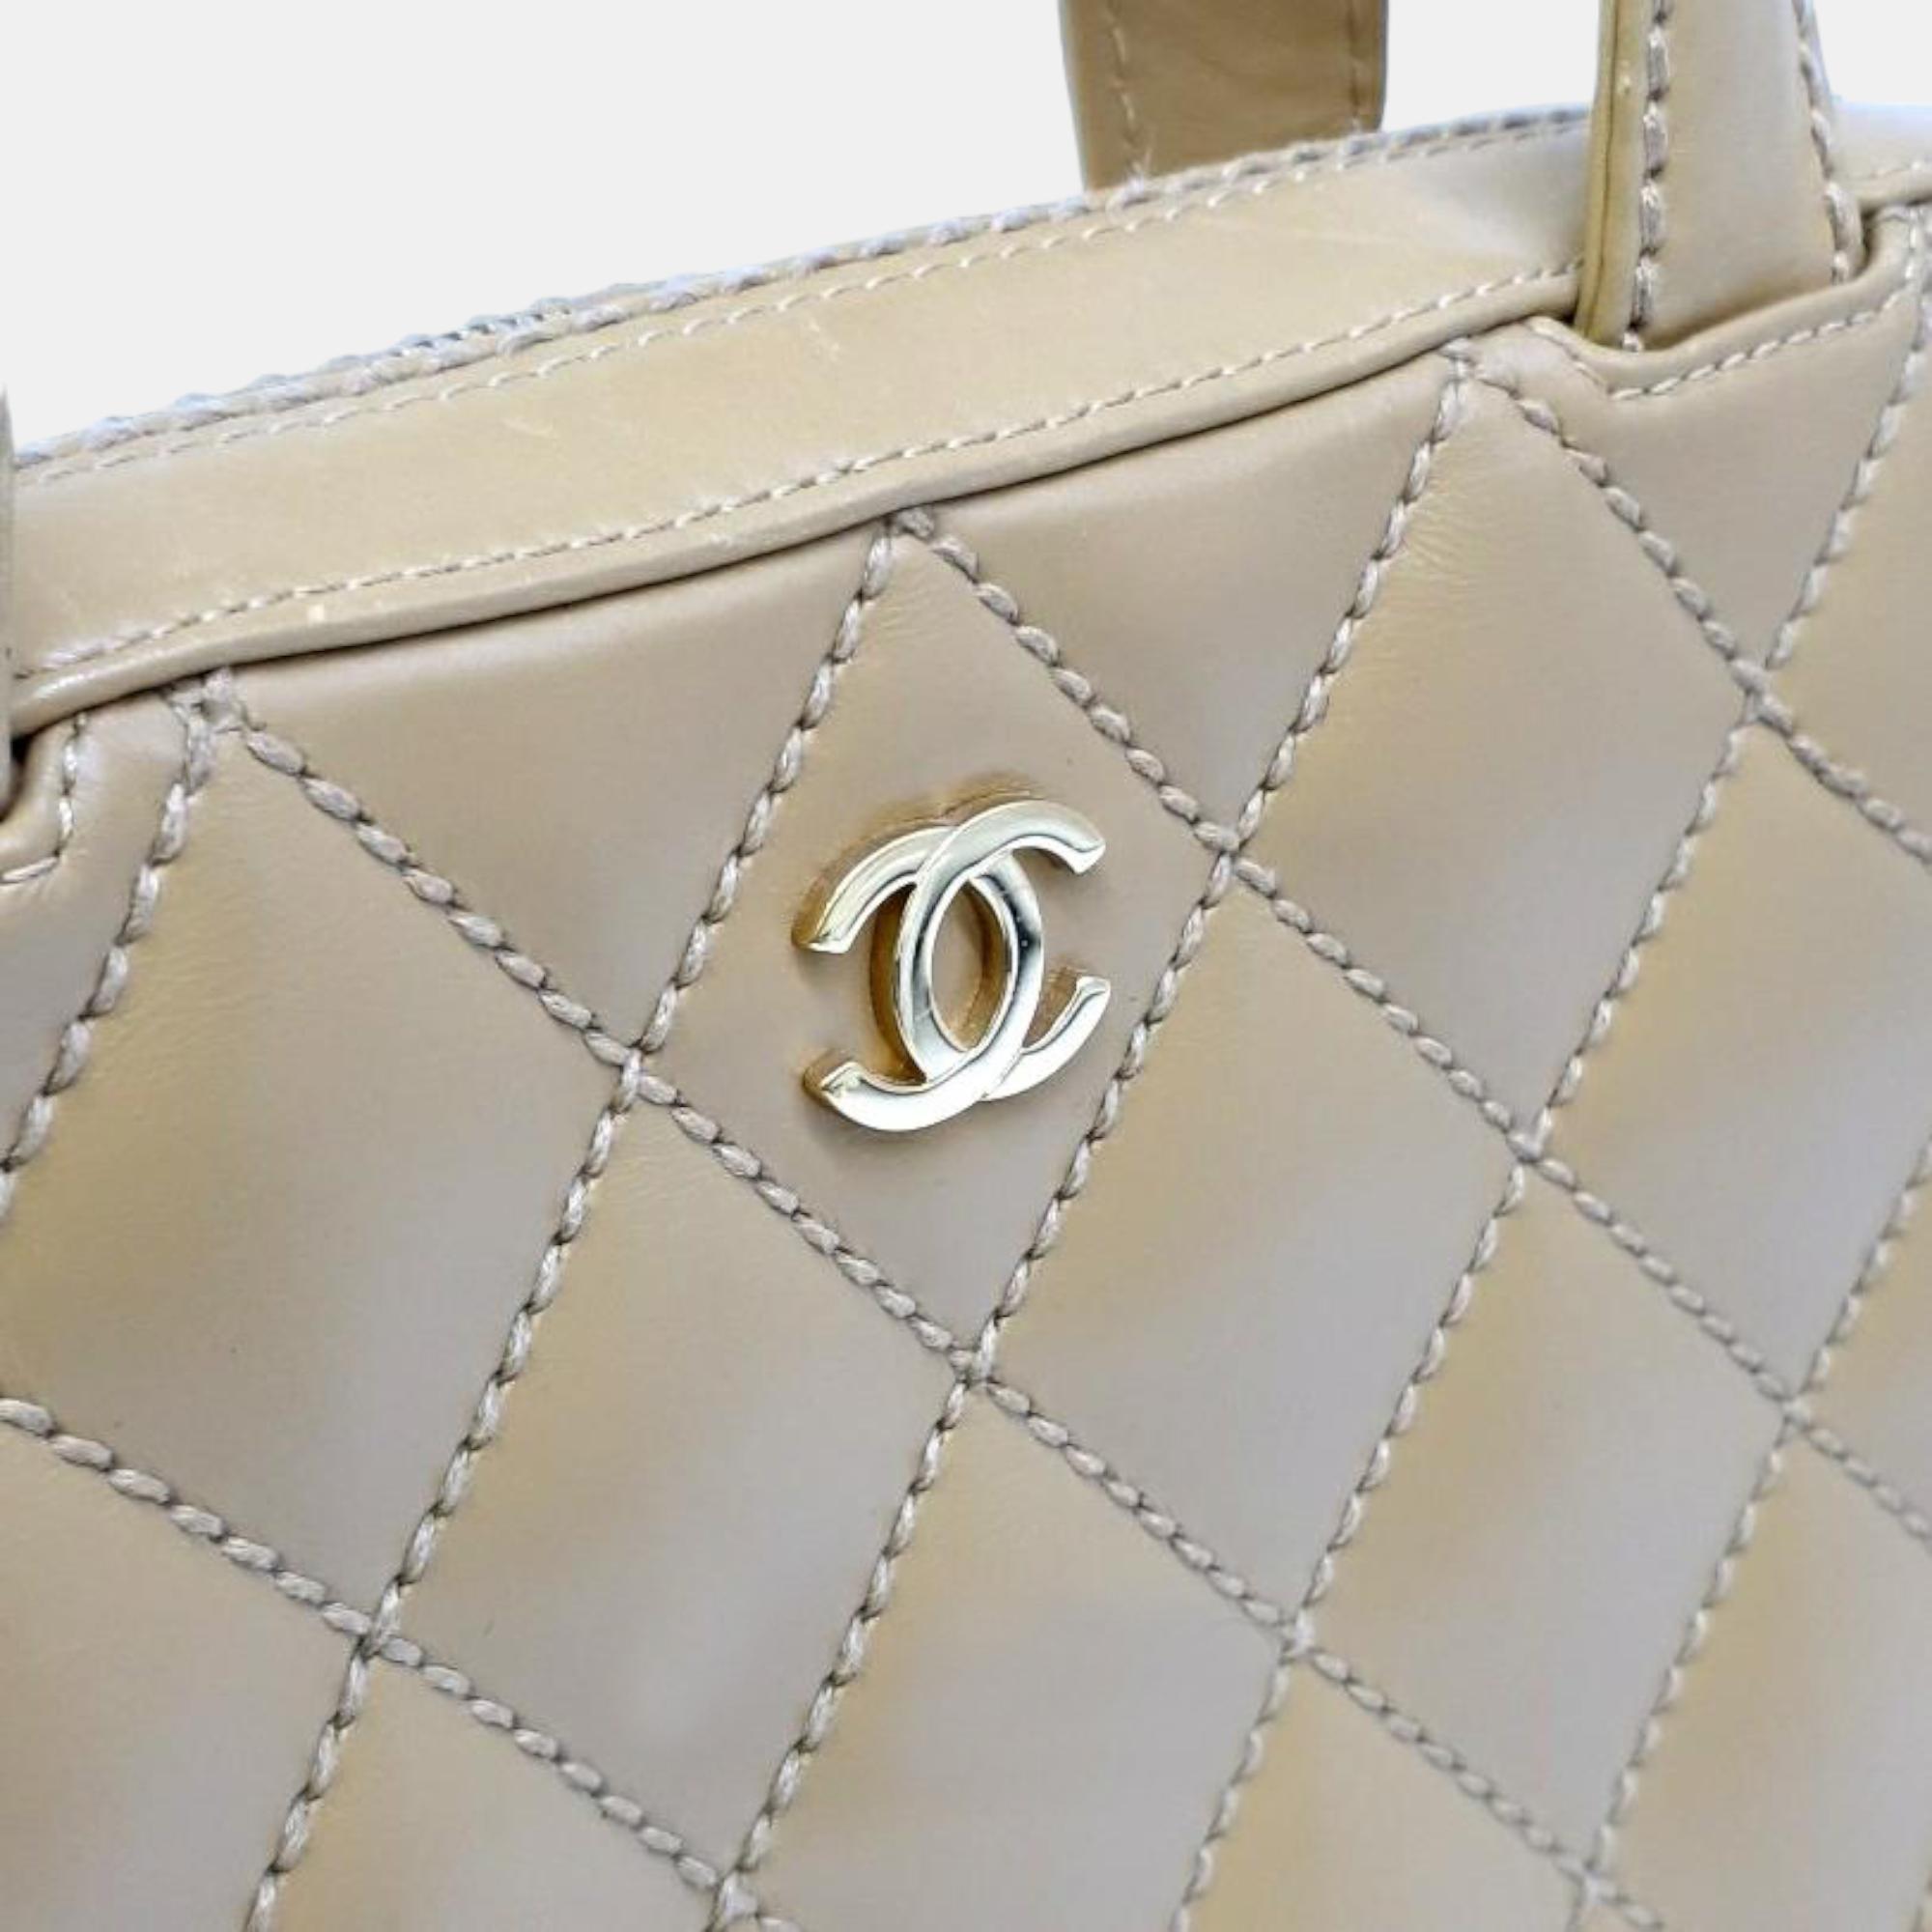 Chanel Beige Leather Wild Stitch Shoulder Bag